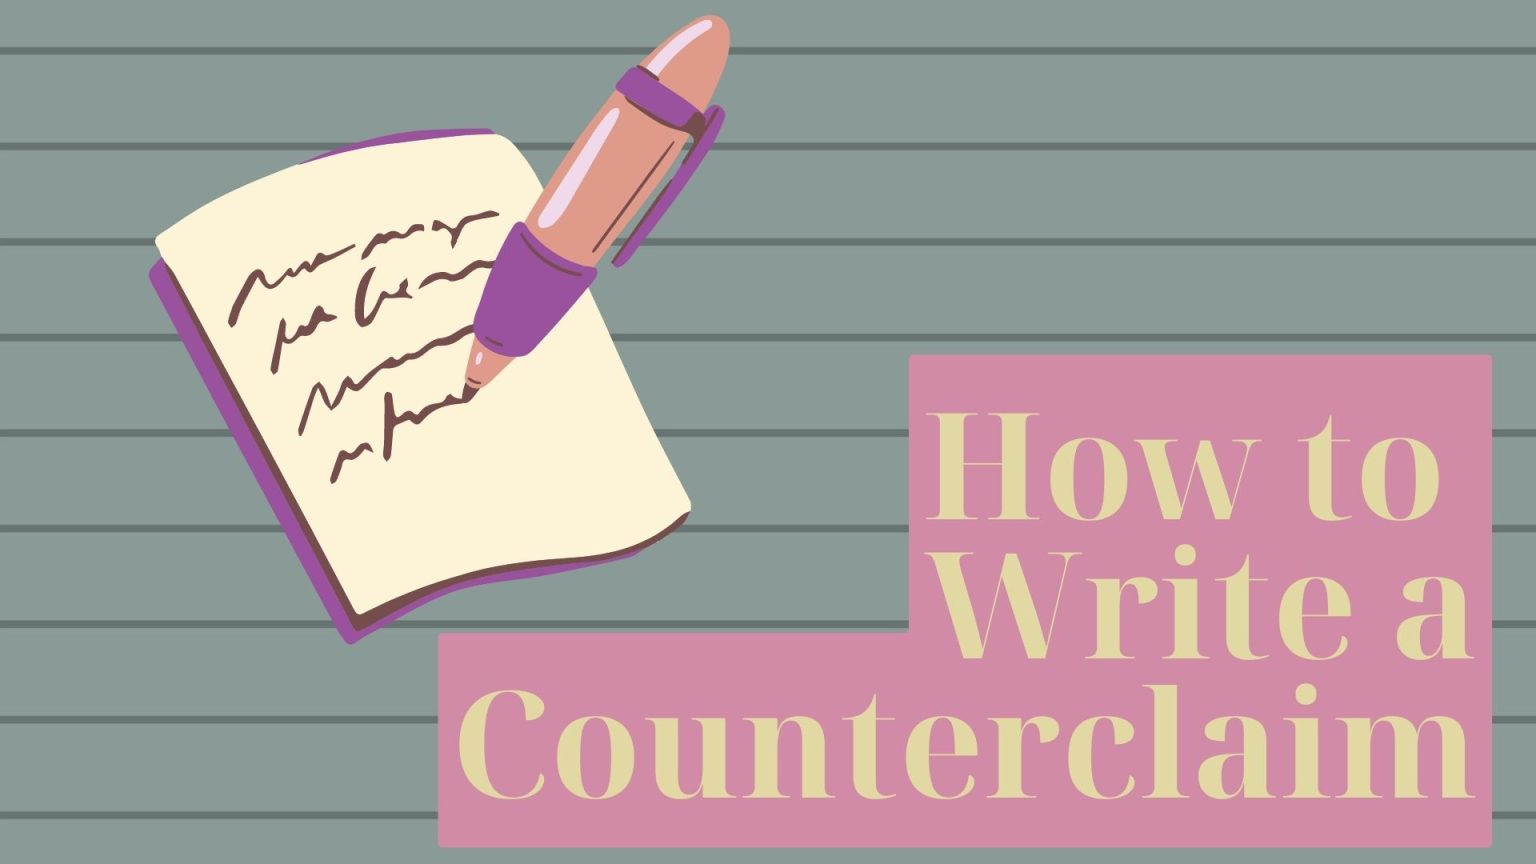 counterclaim for essay writing